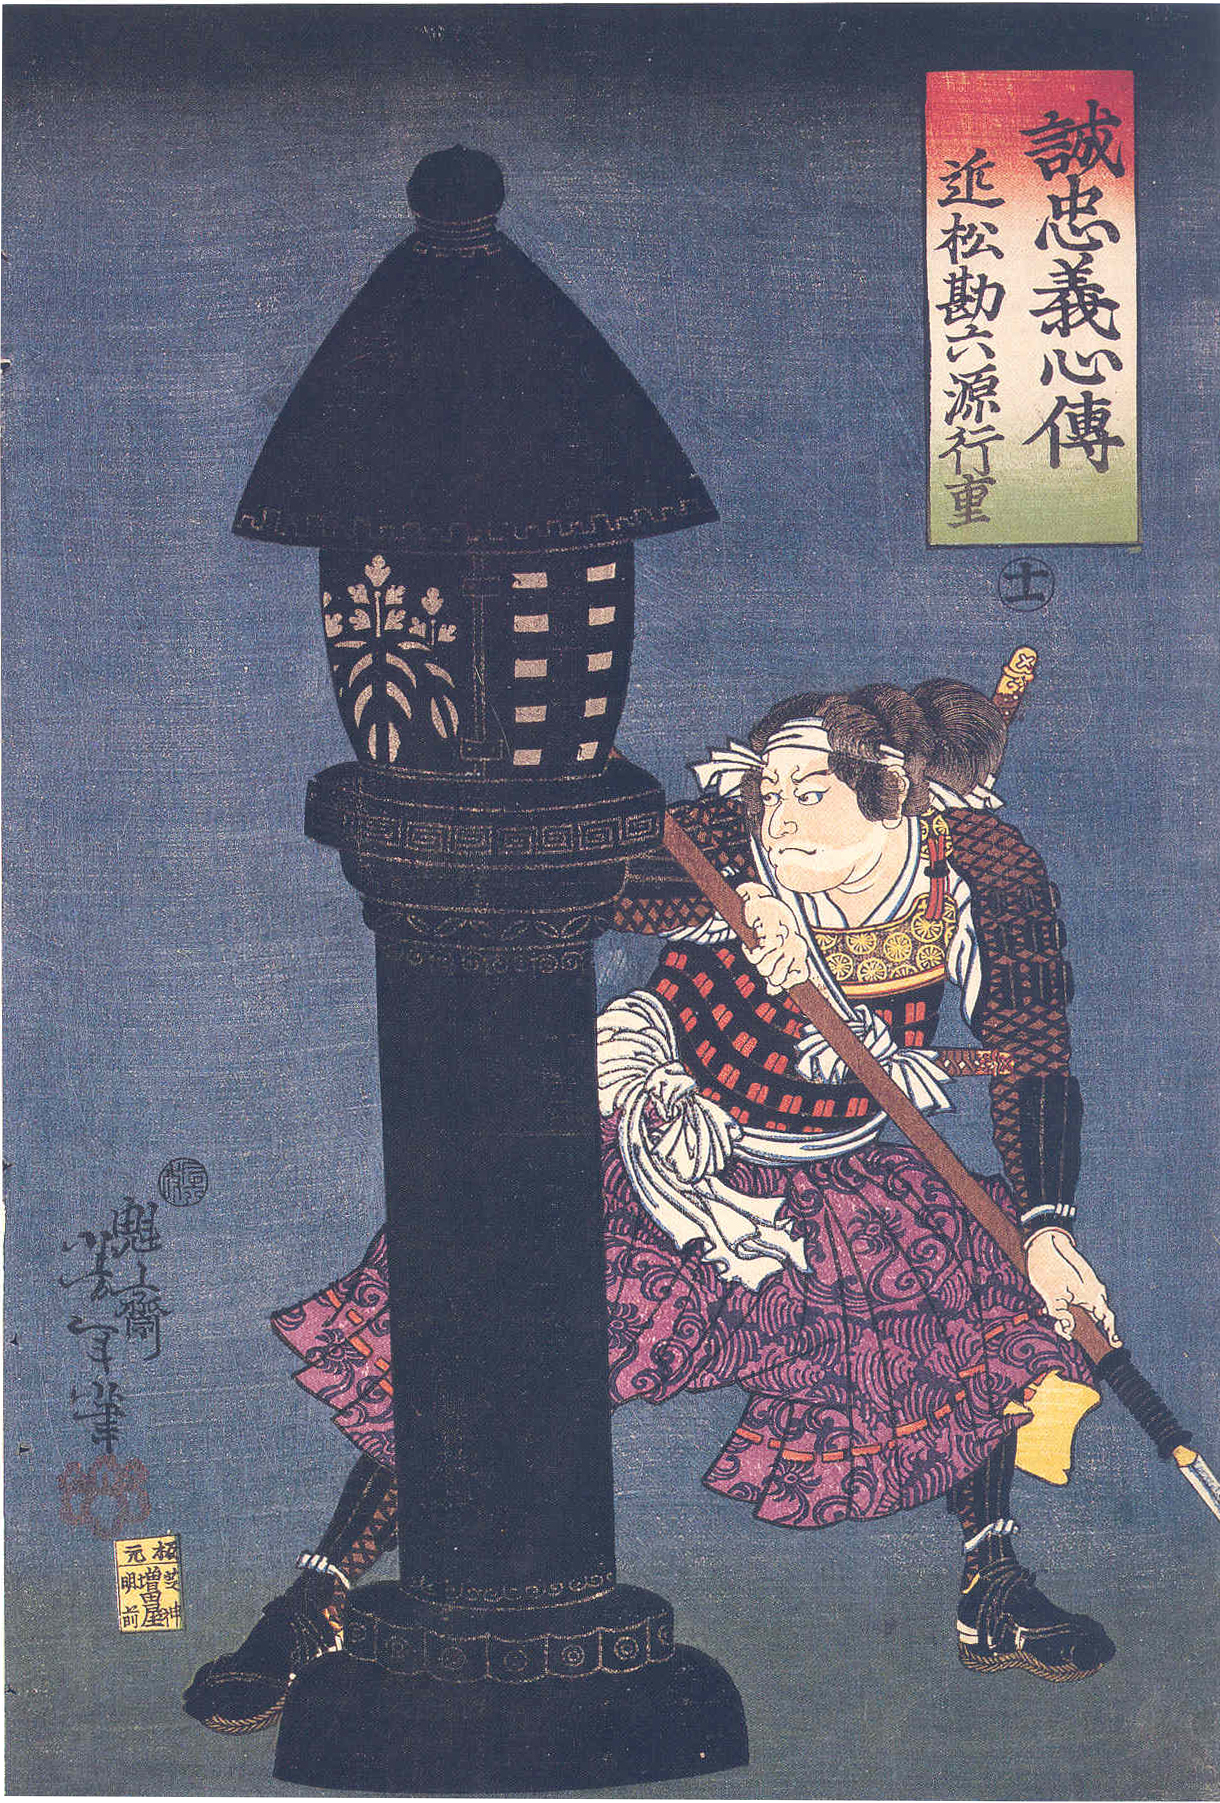 Yoshitoshi - #11 – Chikamatsu Kanroku Minamoto no Yukishige behind a stone lantern. - Portraits of True Loyalty and Chivalrous Spirit